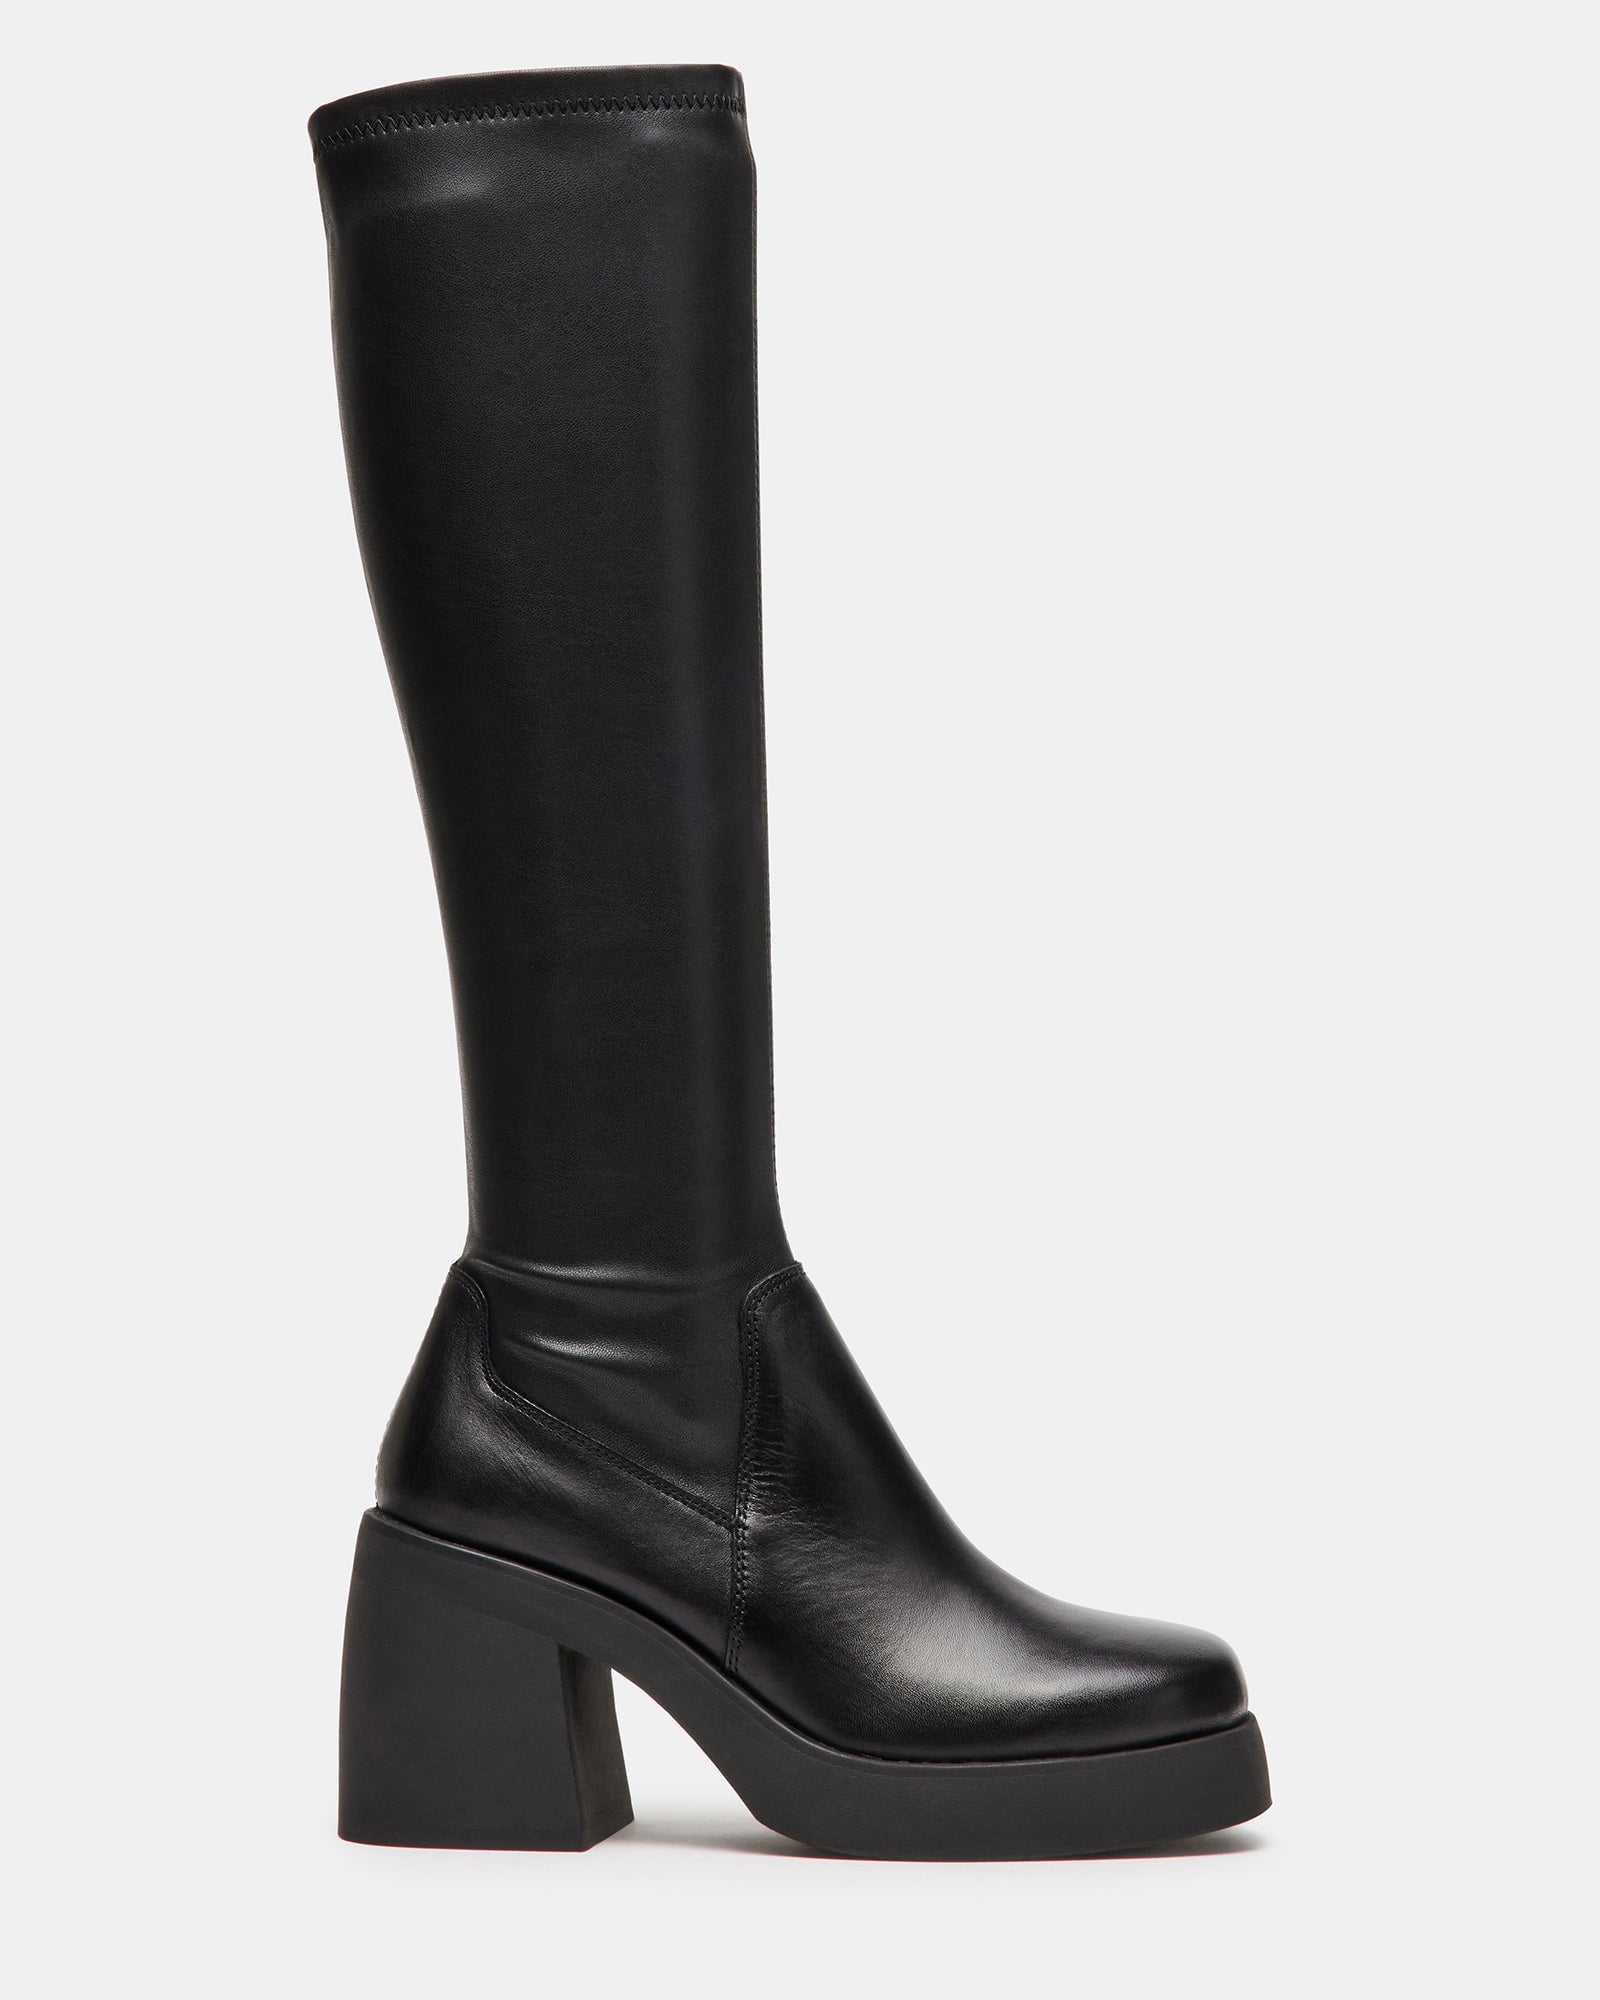 KATHLEEN Black Leather Knee High Boot  Women's Leather Boots – Steve Madden